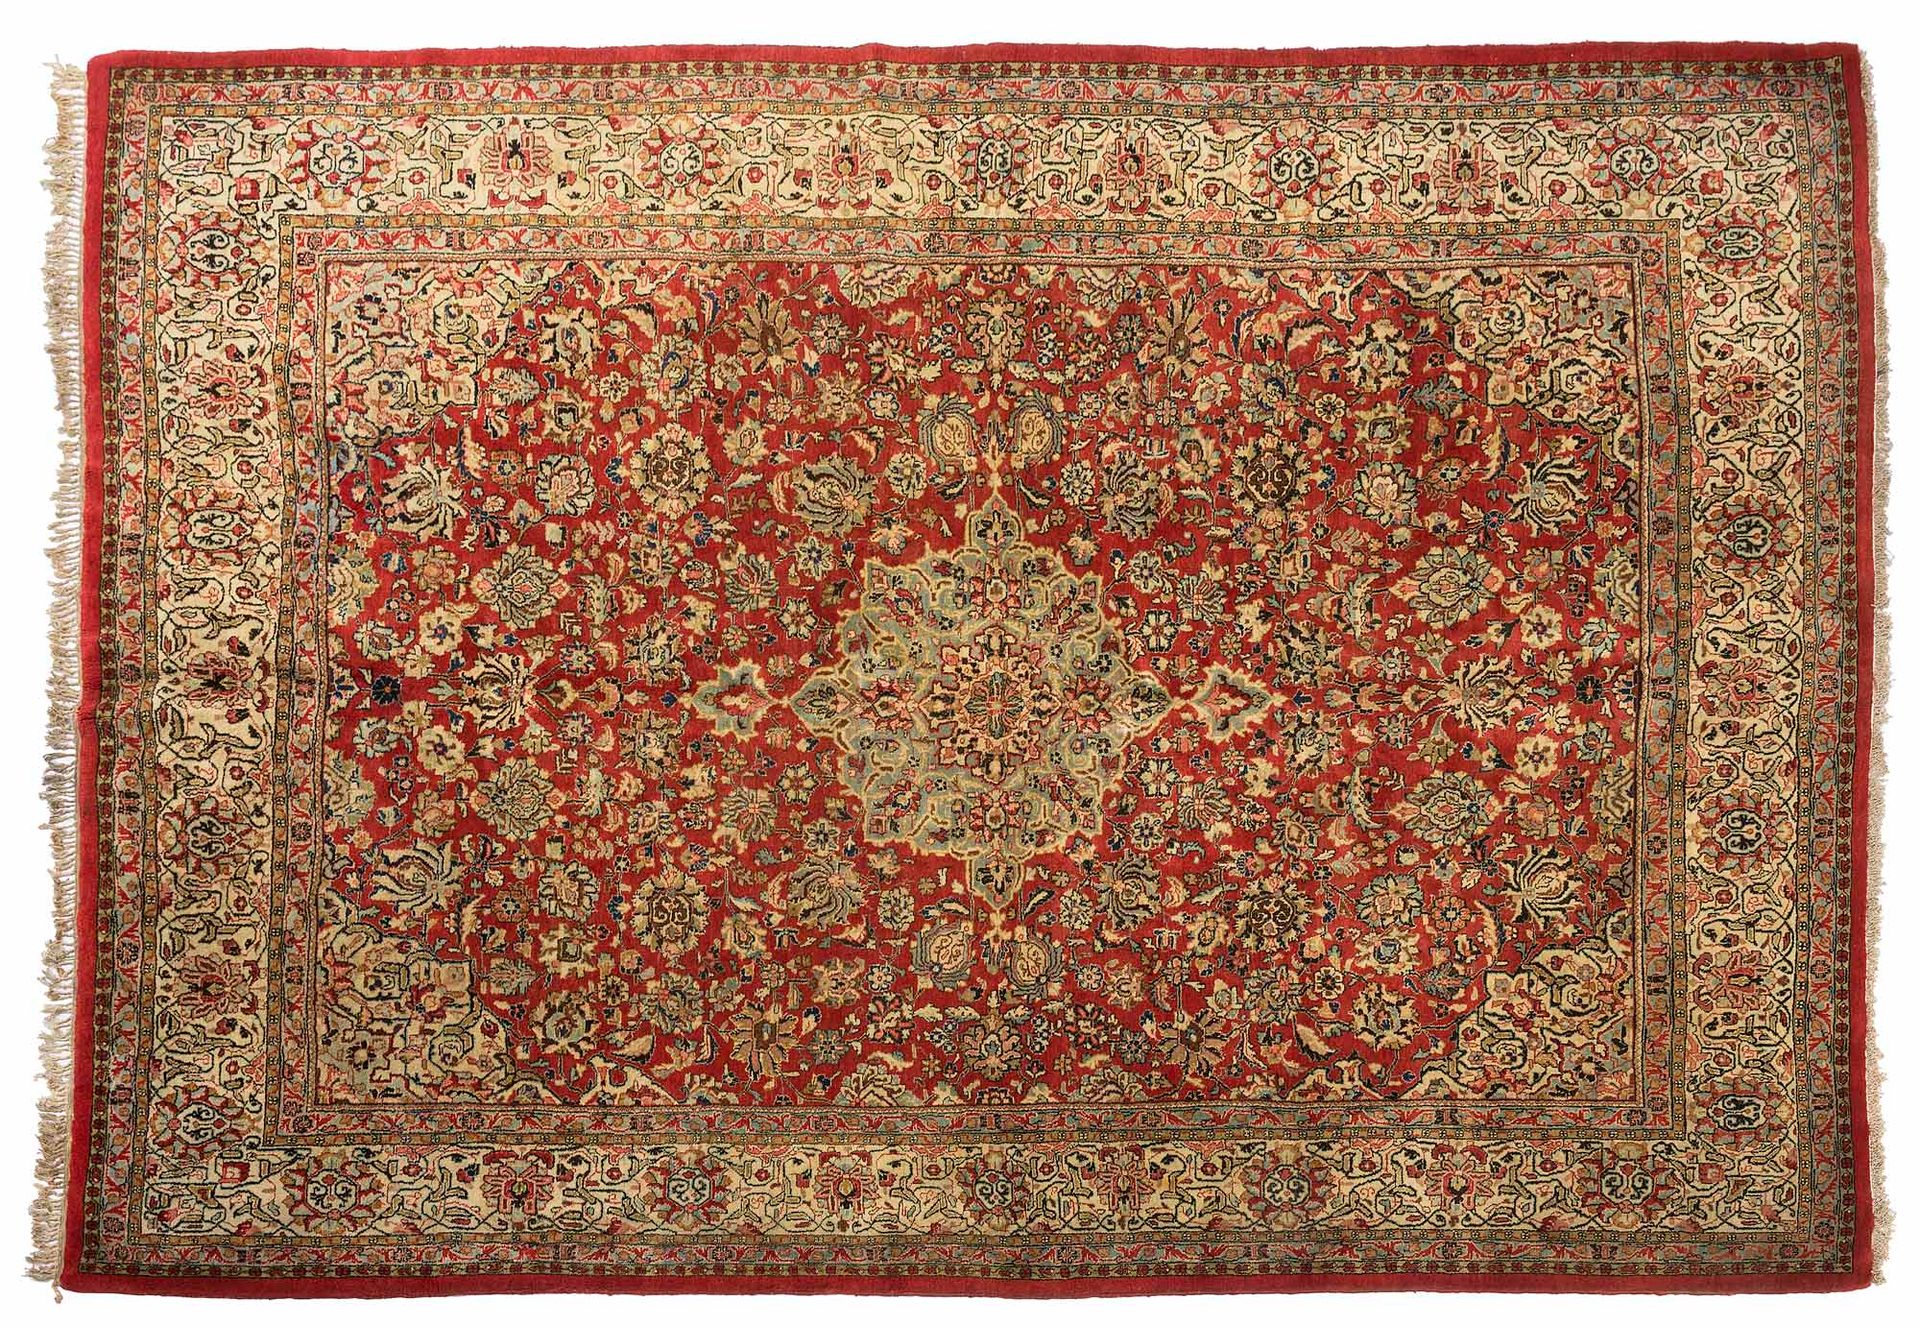 Null SAROUK carpet (Iran), mid 20th century

Dimensions : 380 x 271cm.

Technica&hellip;